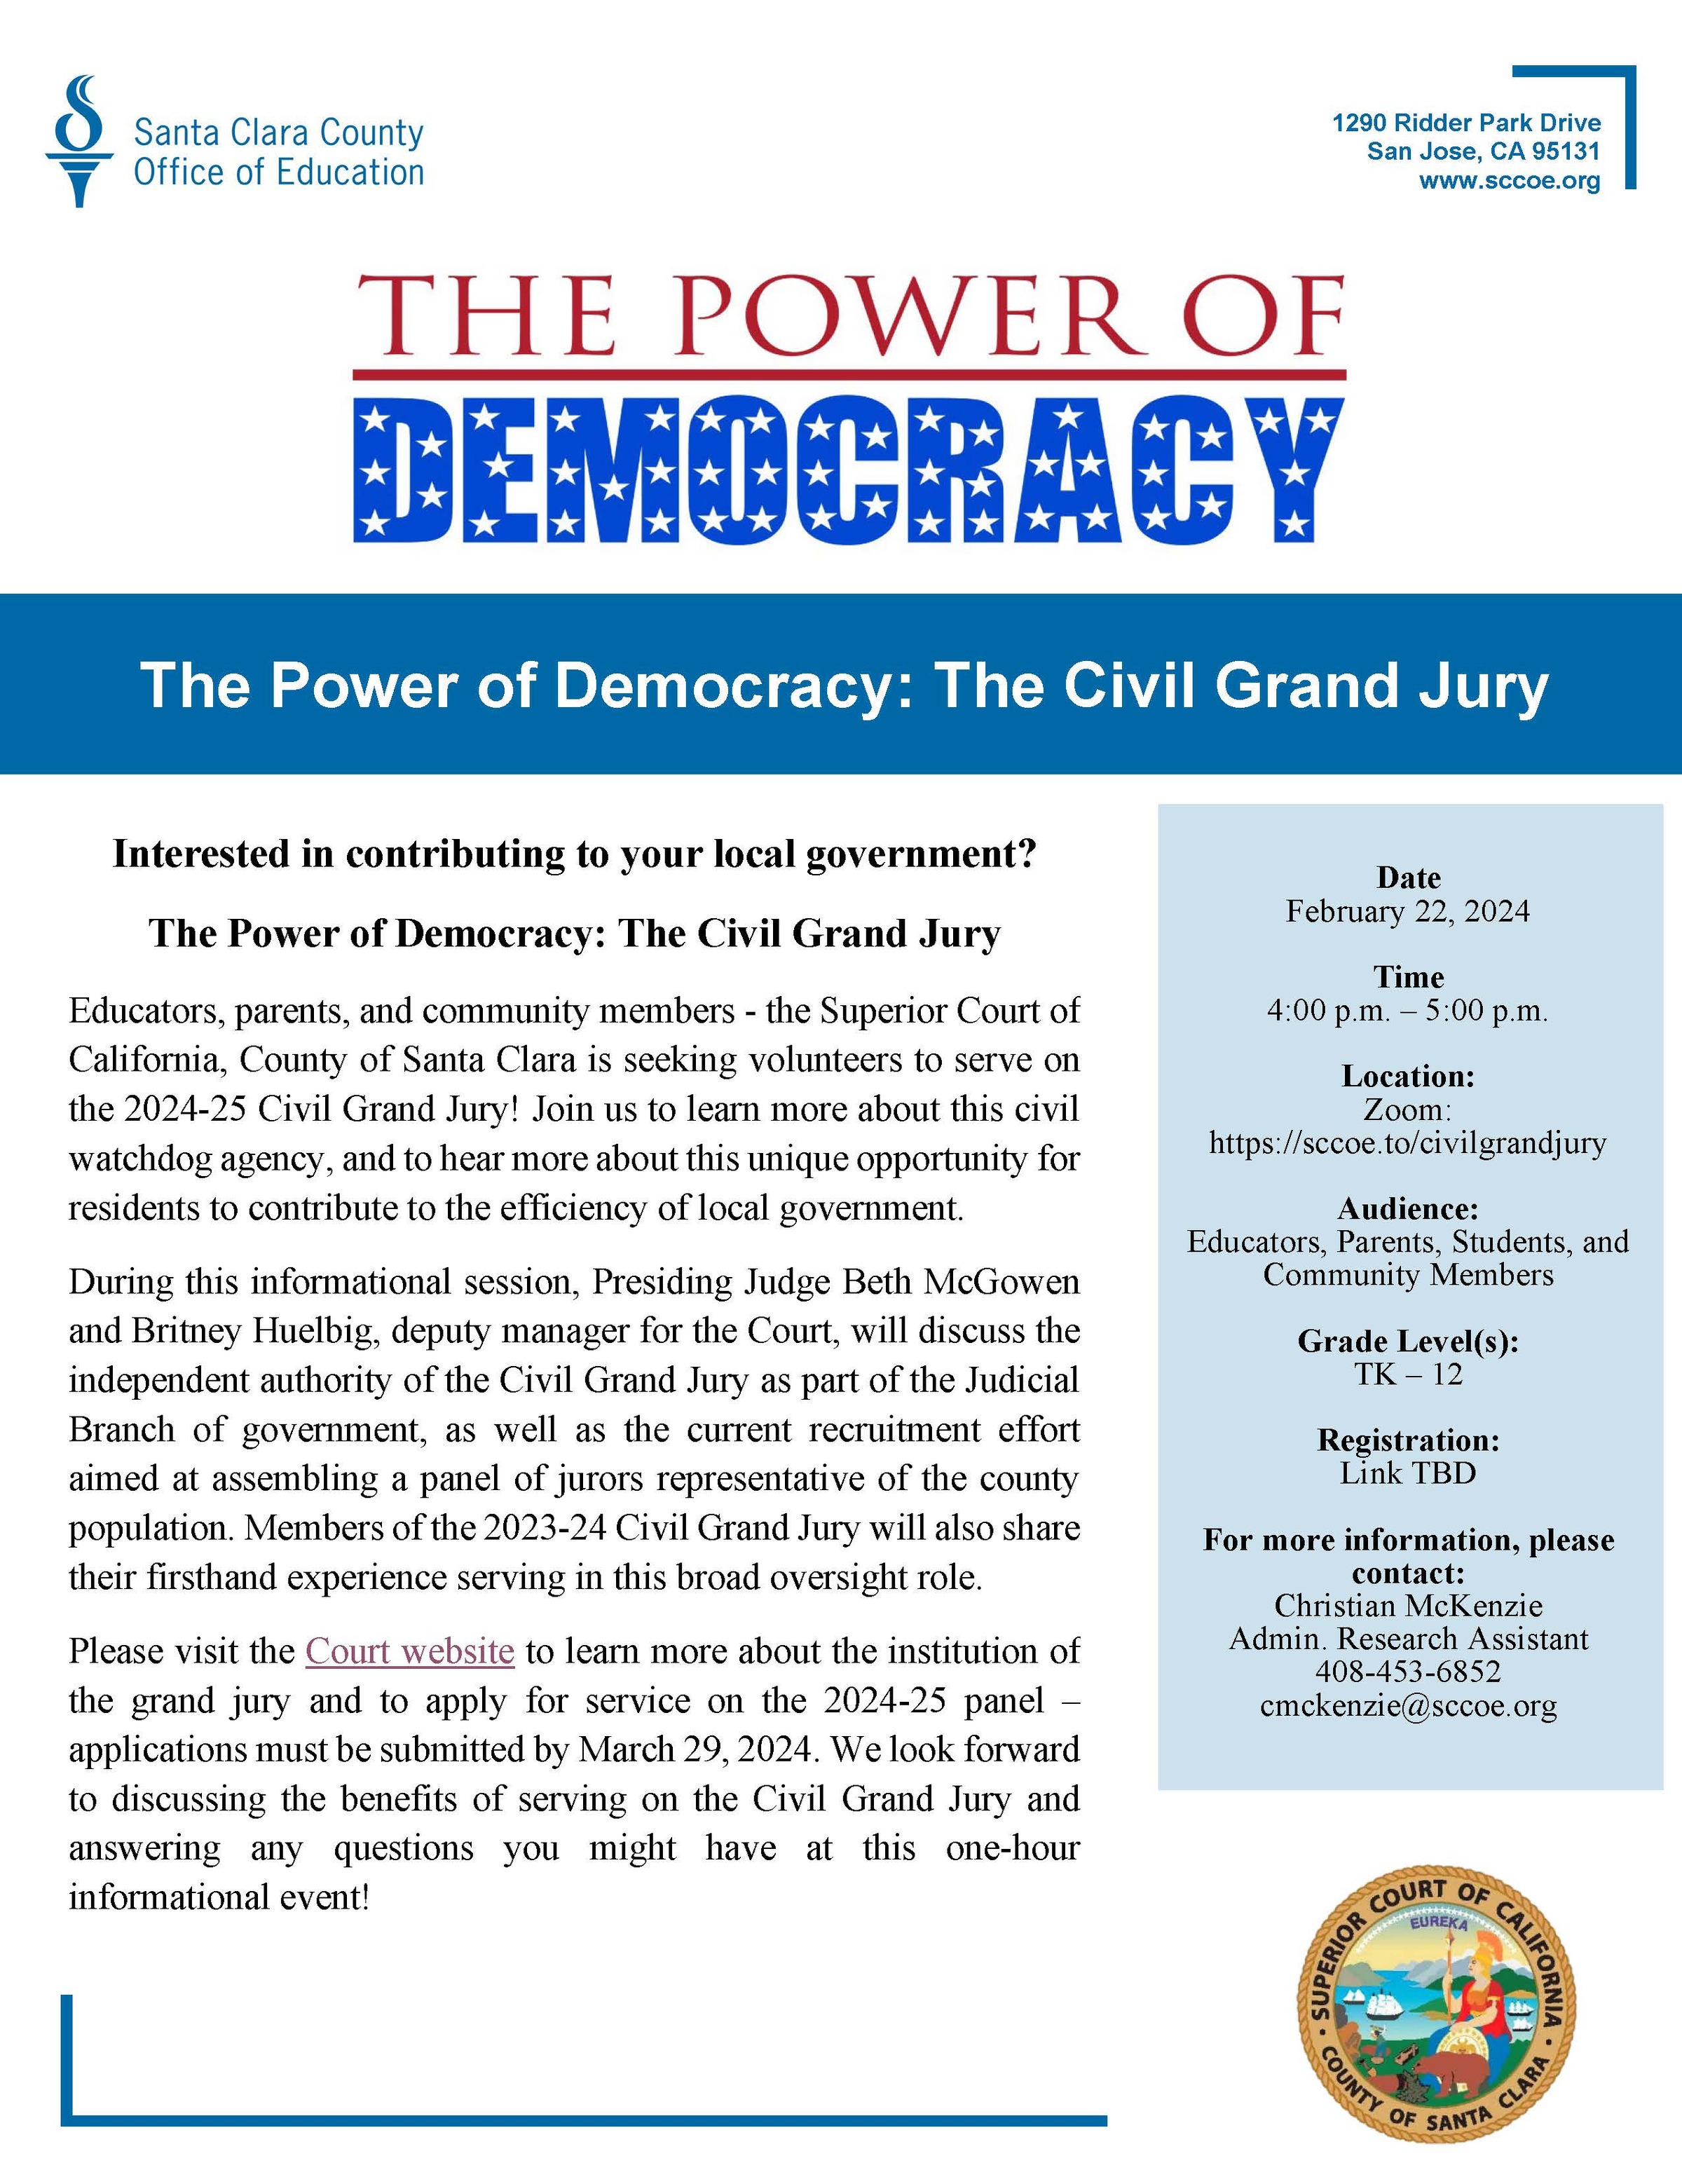 Power of Democracy: Civil Grand Jury